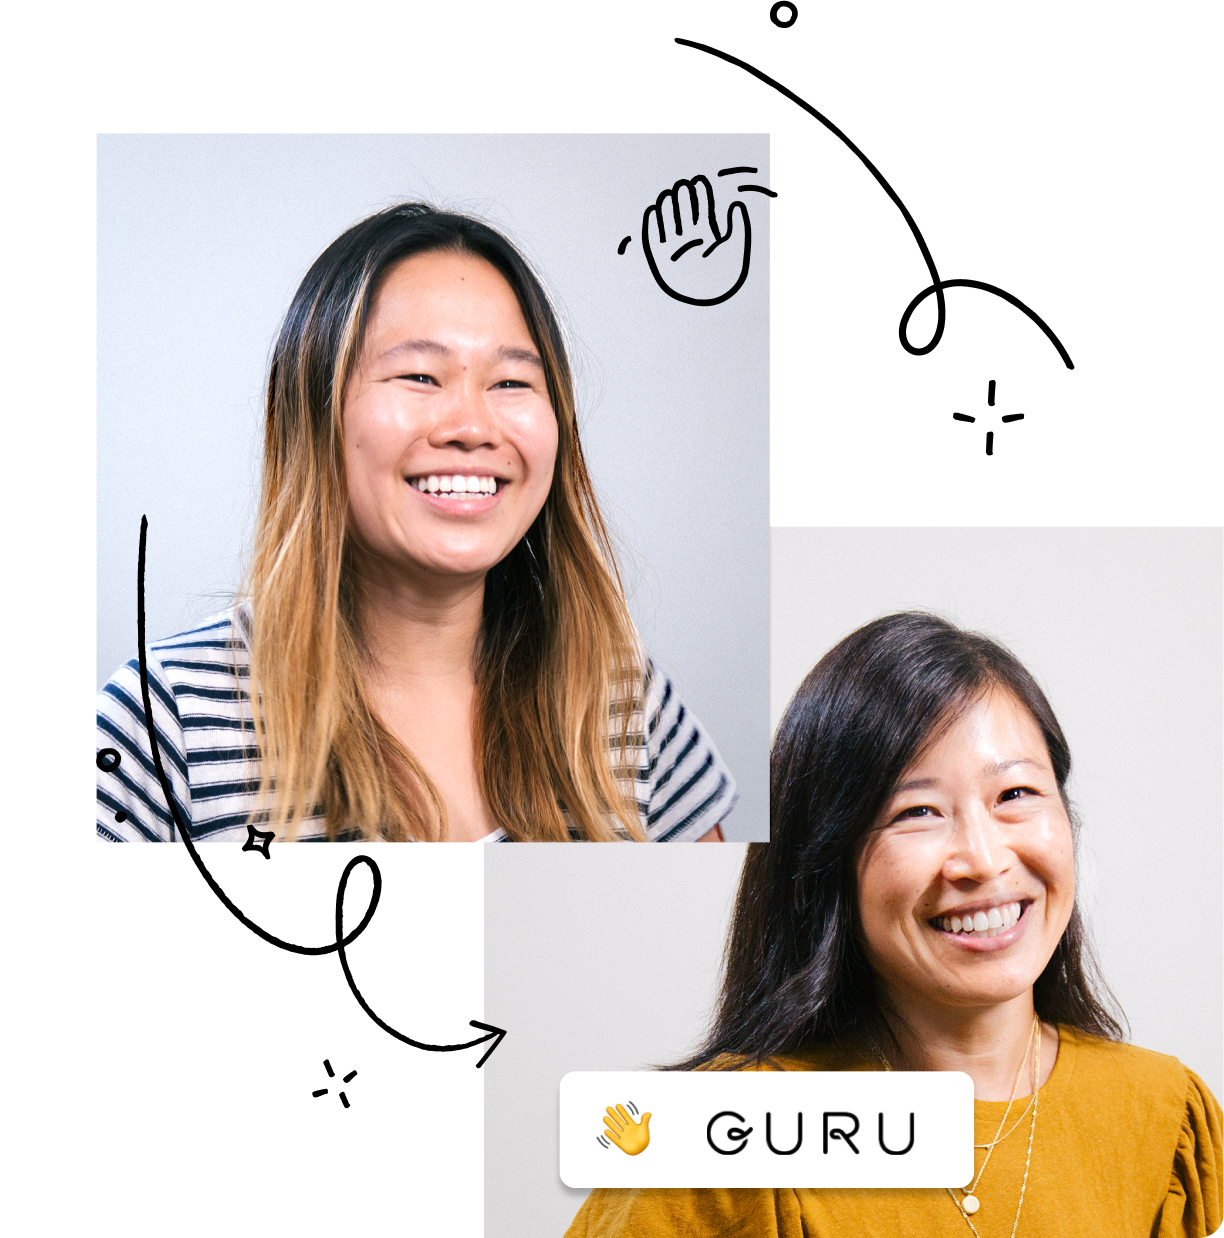 Anne Raimondi, Chief Customer Officer, and June Zhang, Customer Support Manager at Guru